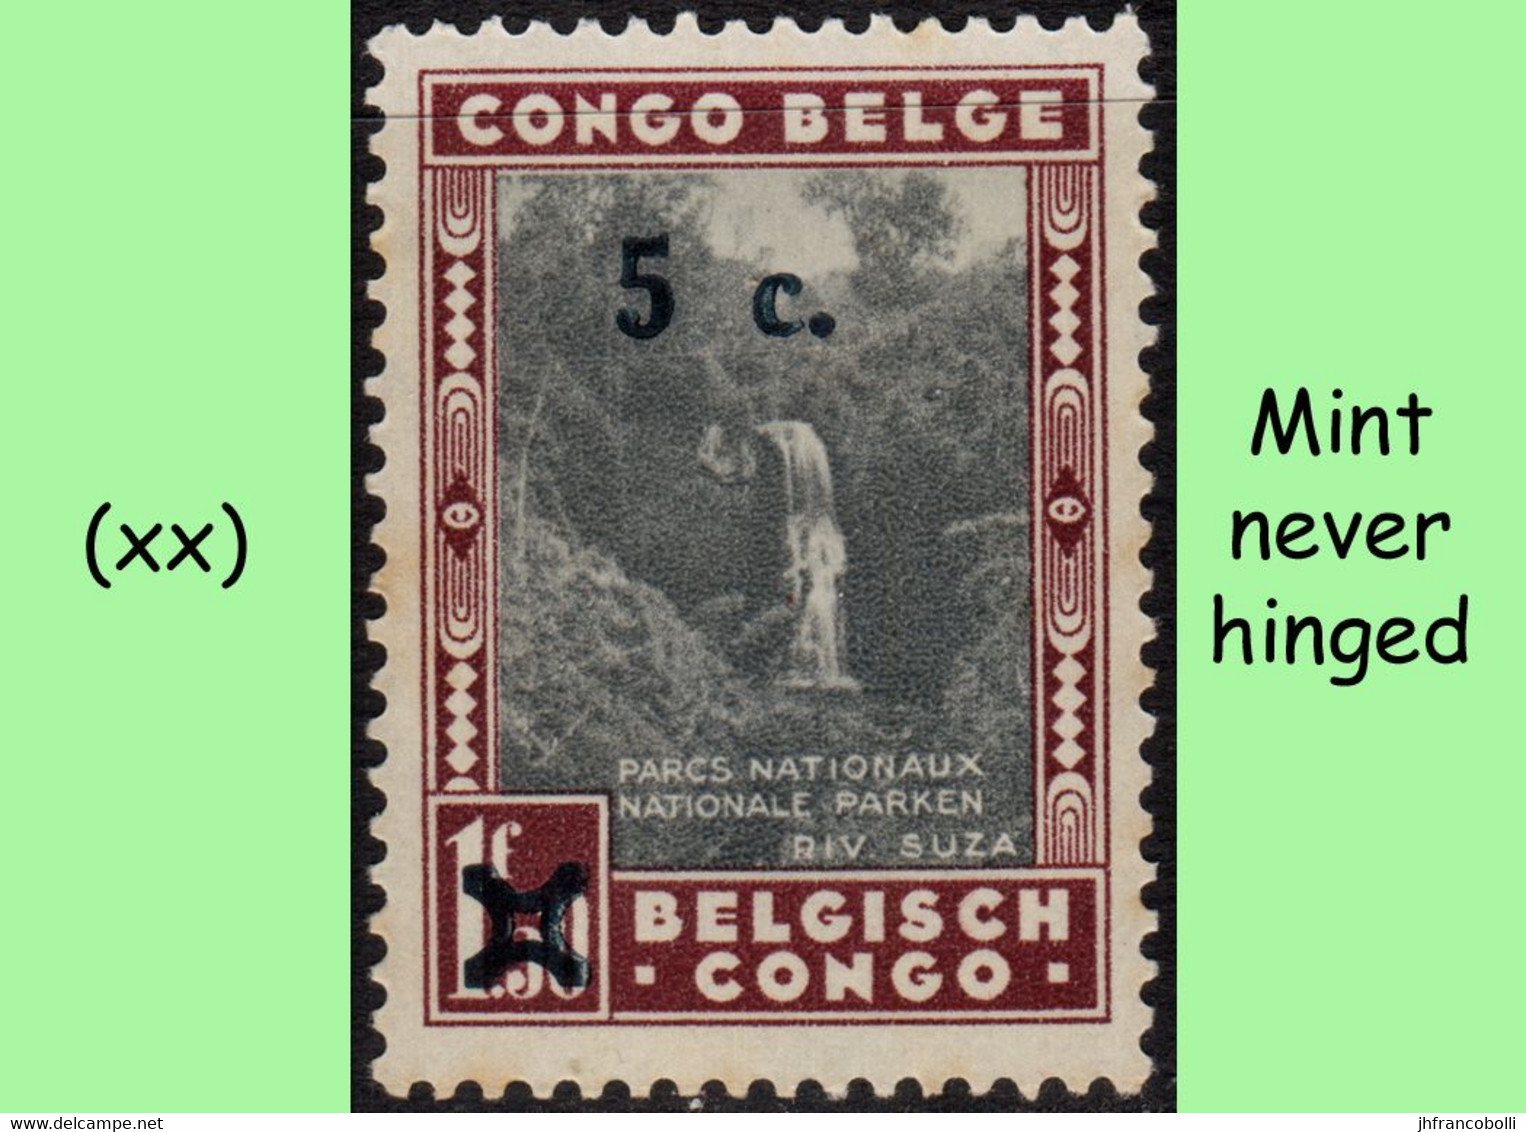 1941 ** BELGIAN CONGO / CONGO BELGE = COB 226 MNH SUZA RIVER = ANGLE BLOCK OF -4- STAMPS WITH ORIGINAL GUM - Blokken